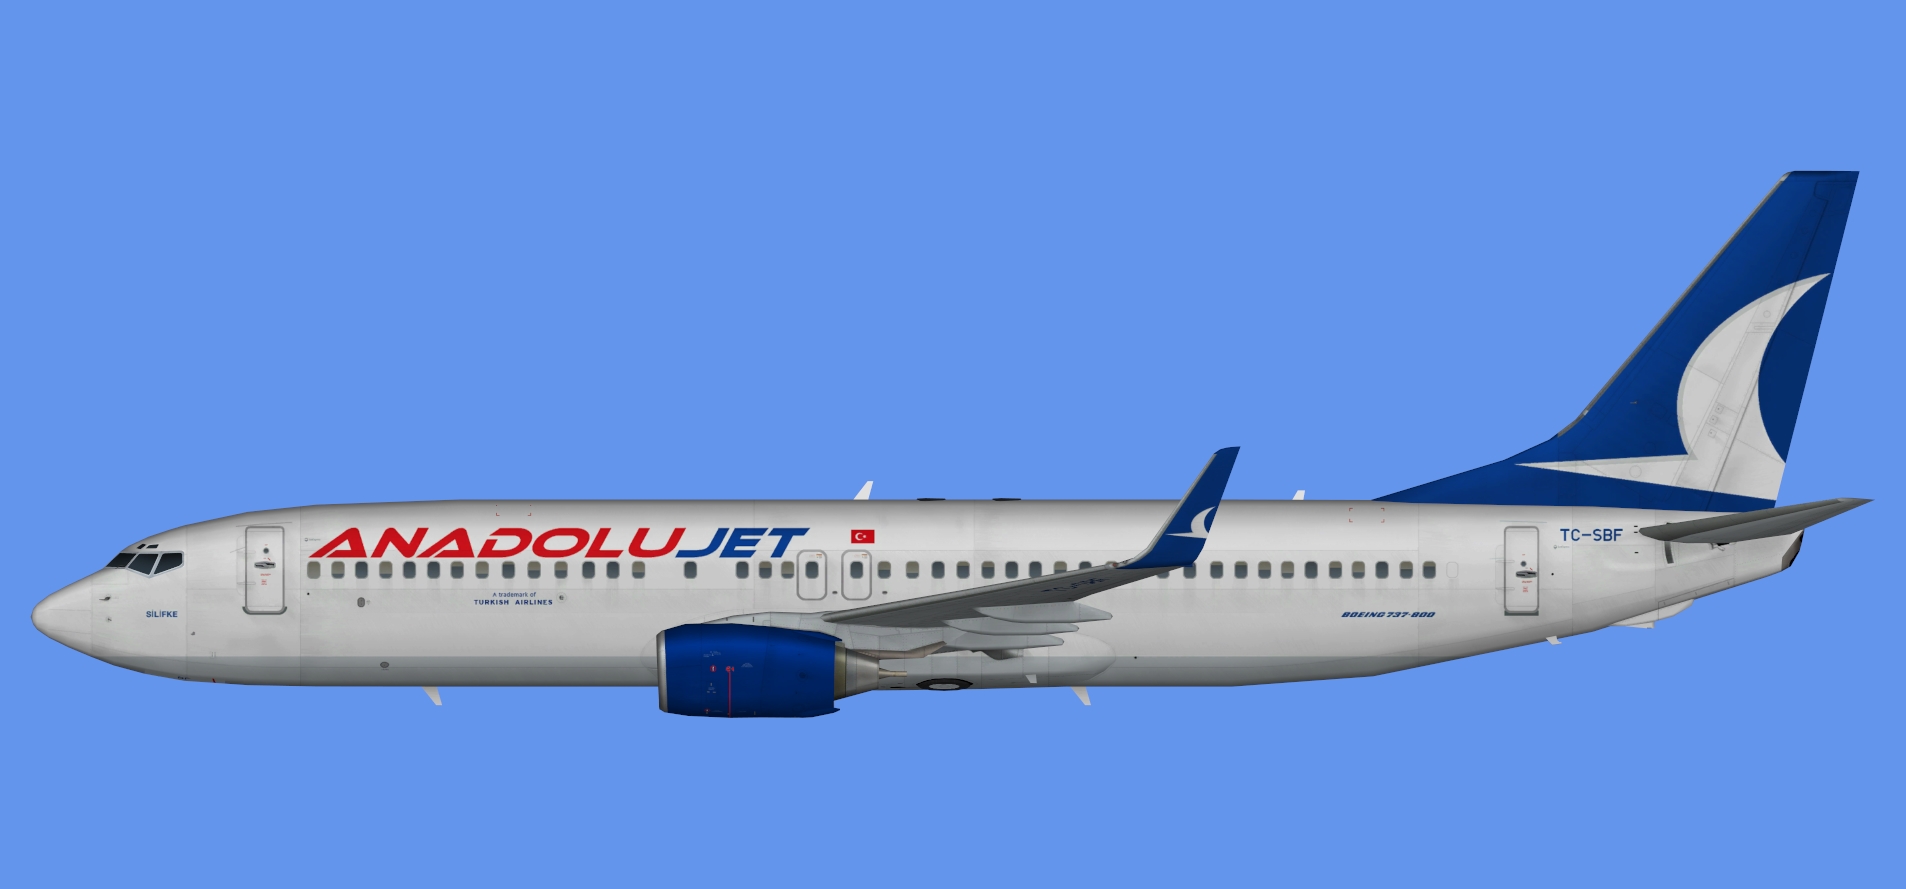 Anadolujet Boeing 737-800 ('eyebrows')